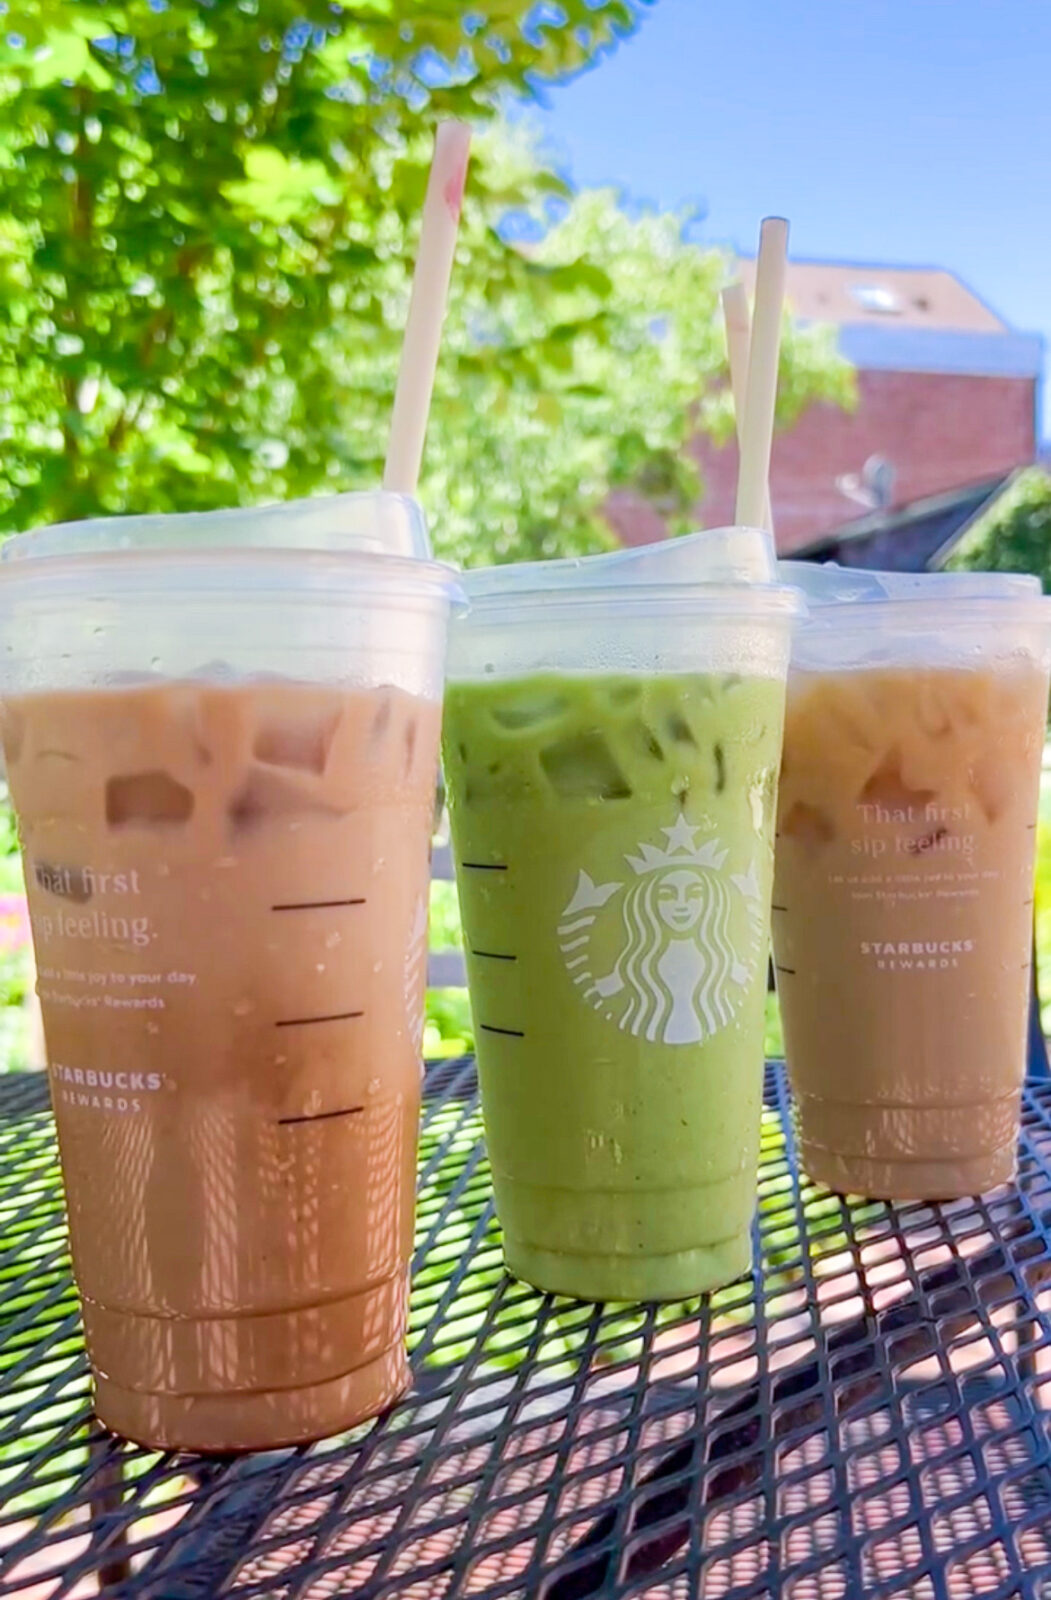 starbucks drinks - matcha green tea latte, chai tea latte, and an oatmilk latte with one pump of mocha